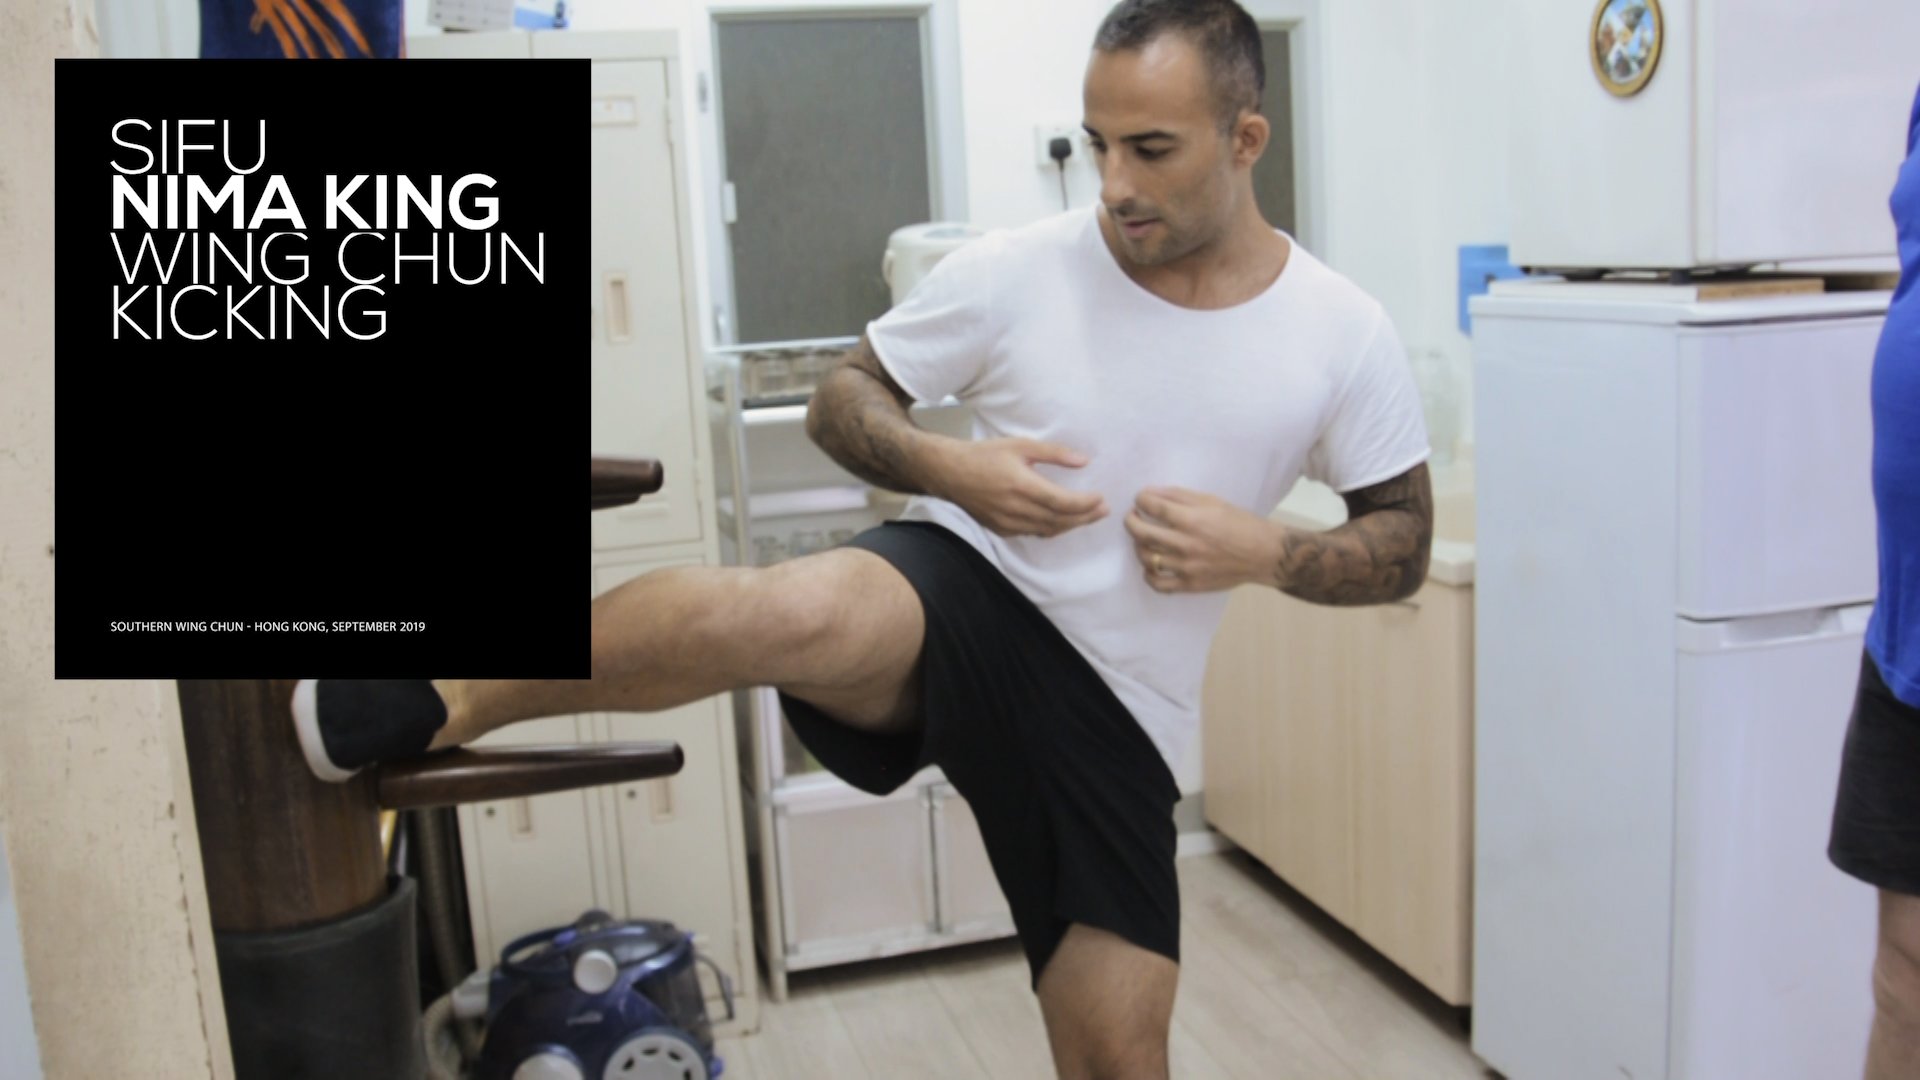 Sifu Nima King - Wing Chun Kicking at Sigungs